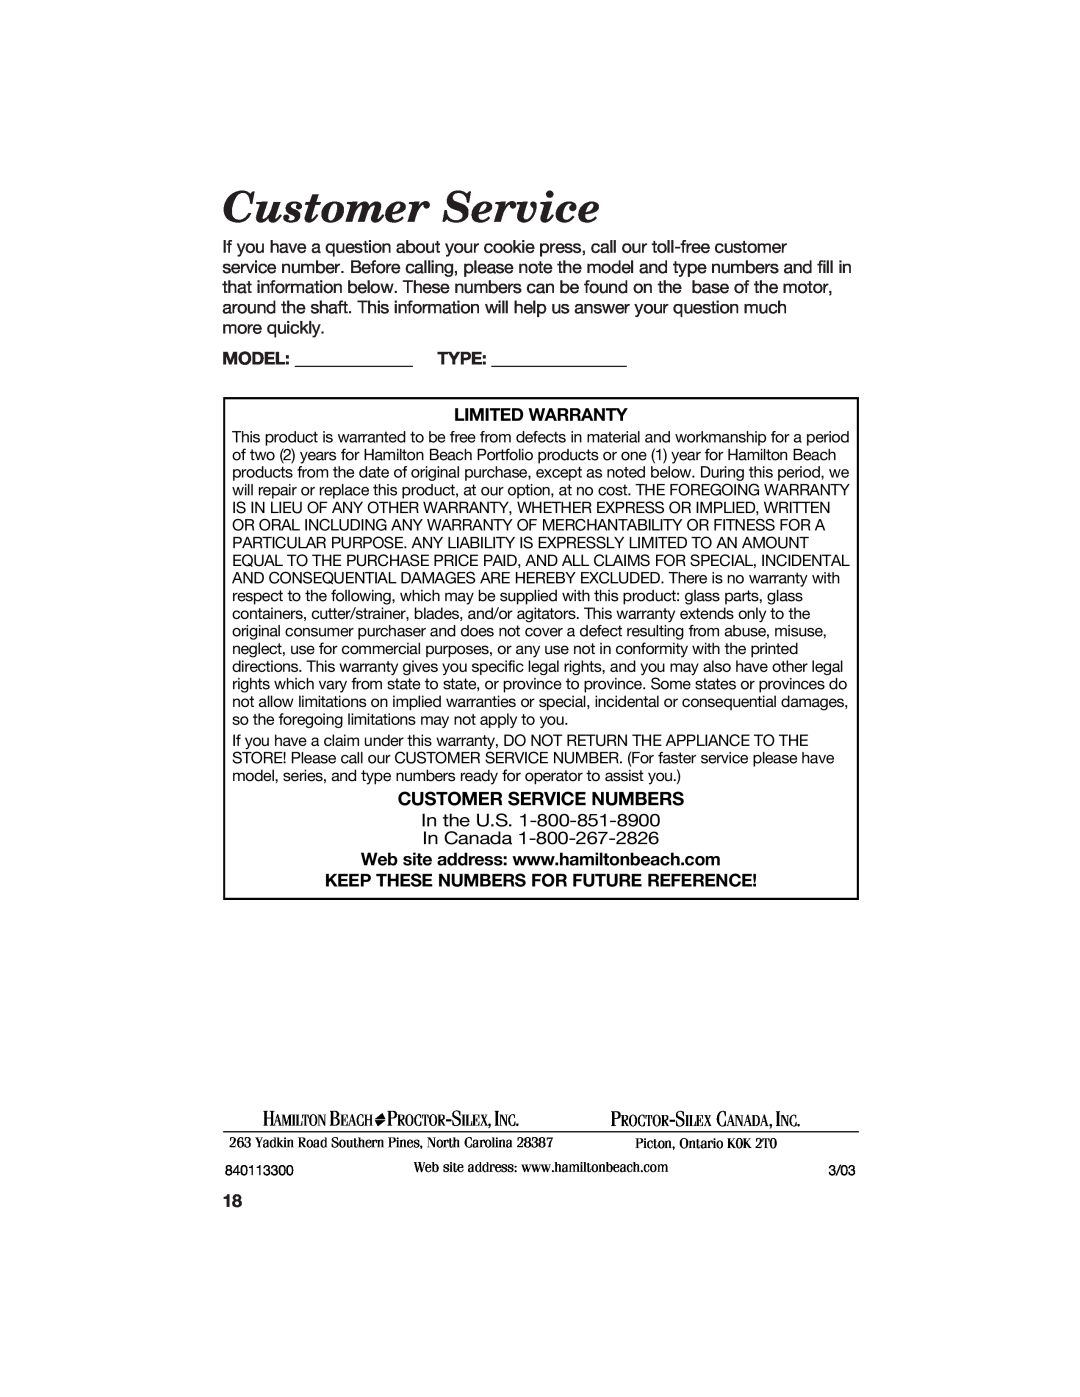 Hamilton Beach Cookie Press and Cake & Food Decorator Customer Service, Model Type, Limited Warranty, Proctor-Silex,Inc 